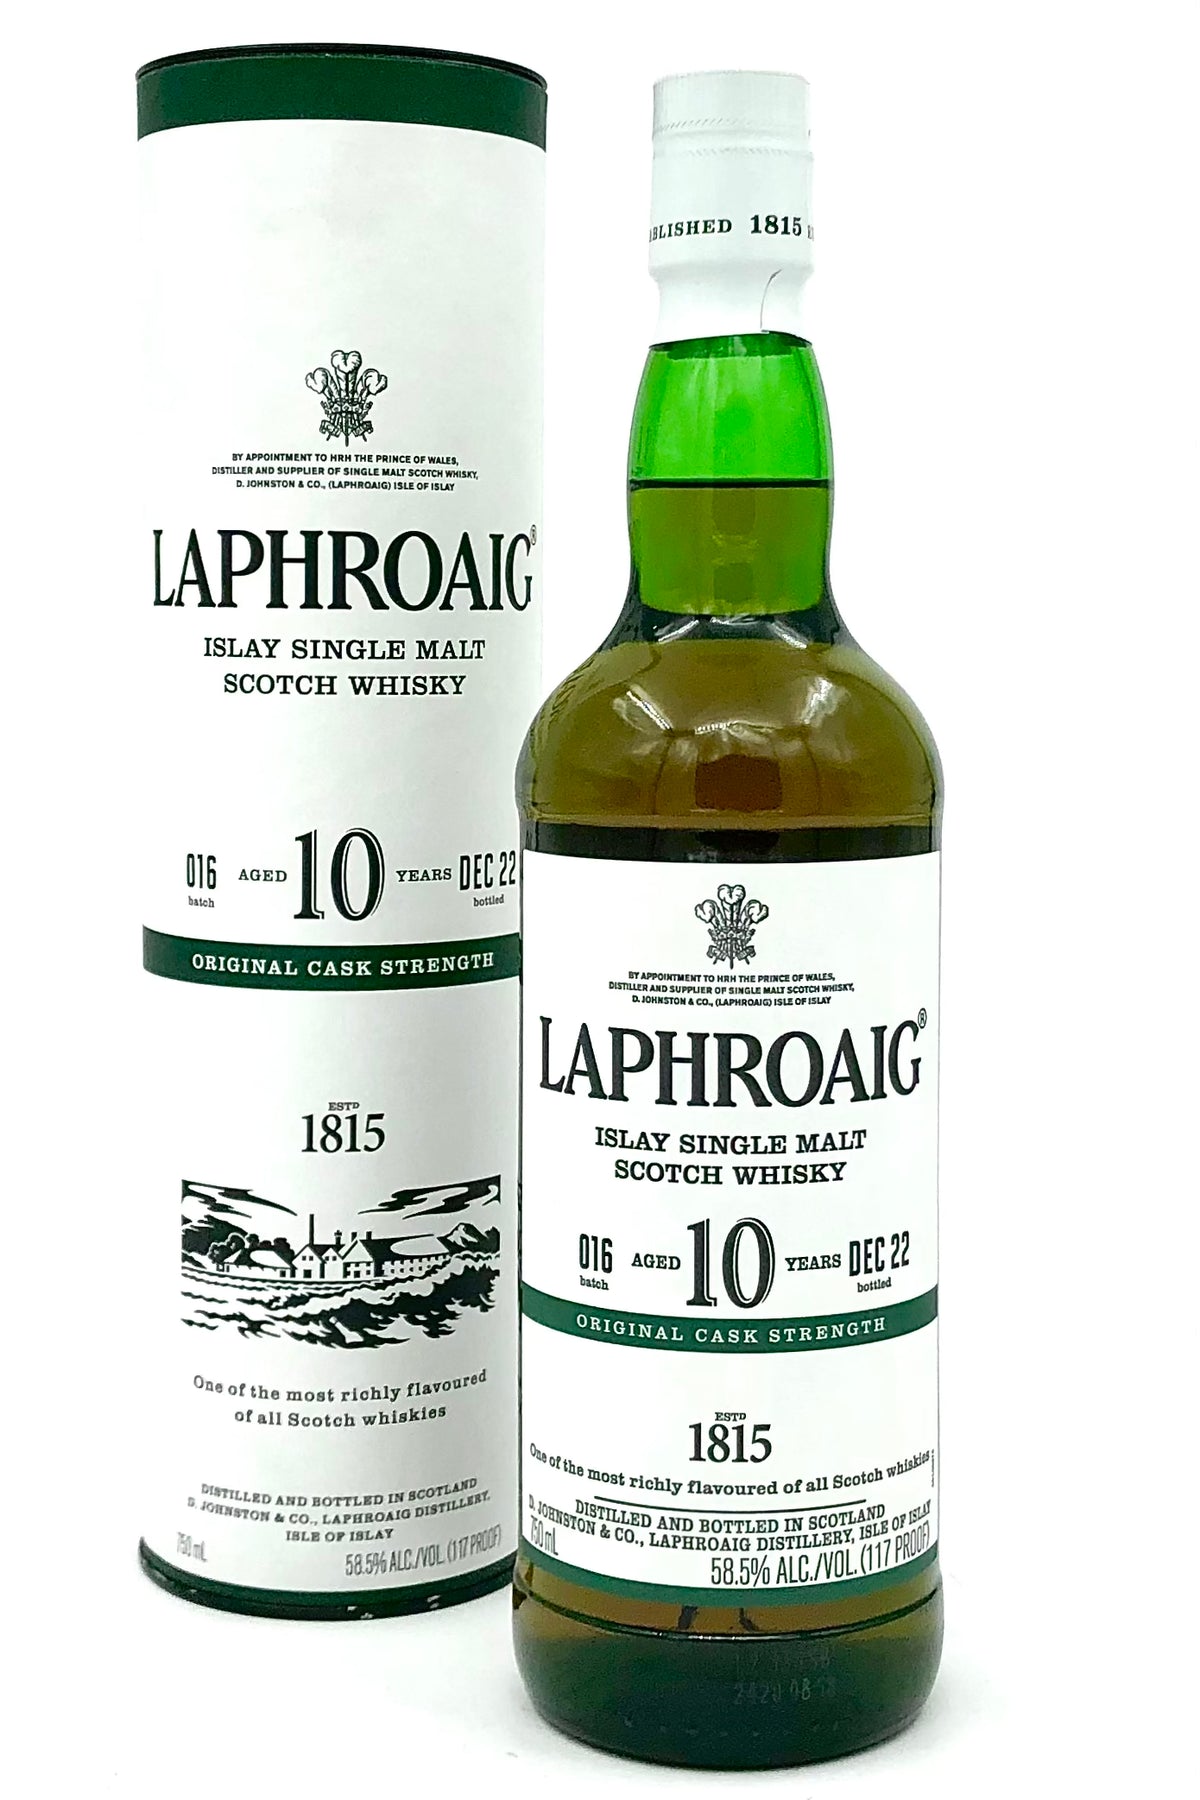 Laphroaig 10 Year Sherry Oak